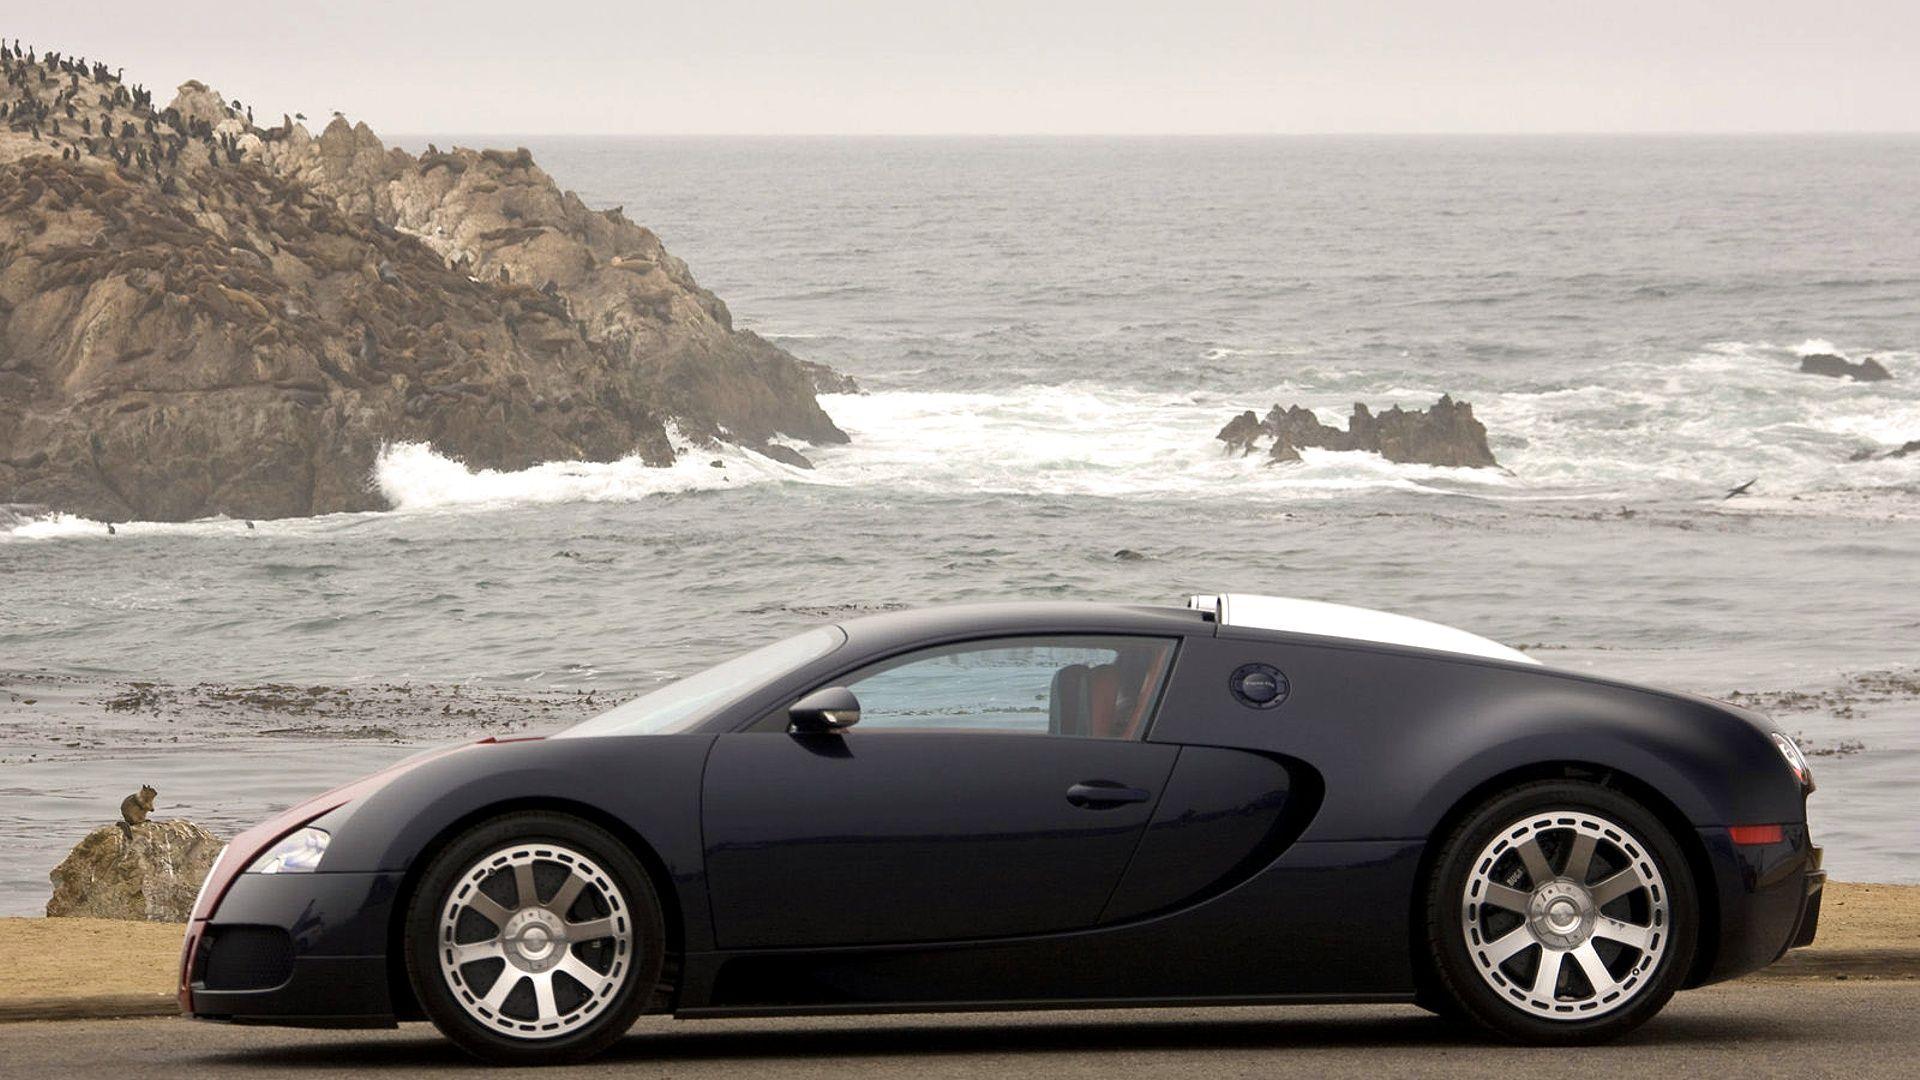 Bugatti on HD Wallpaper. Veyron Grand Sport and Gold Edition